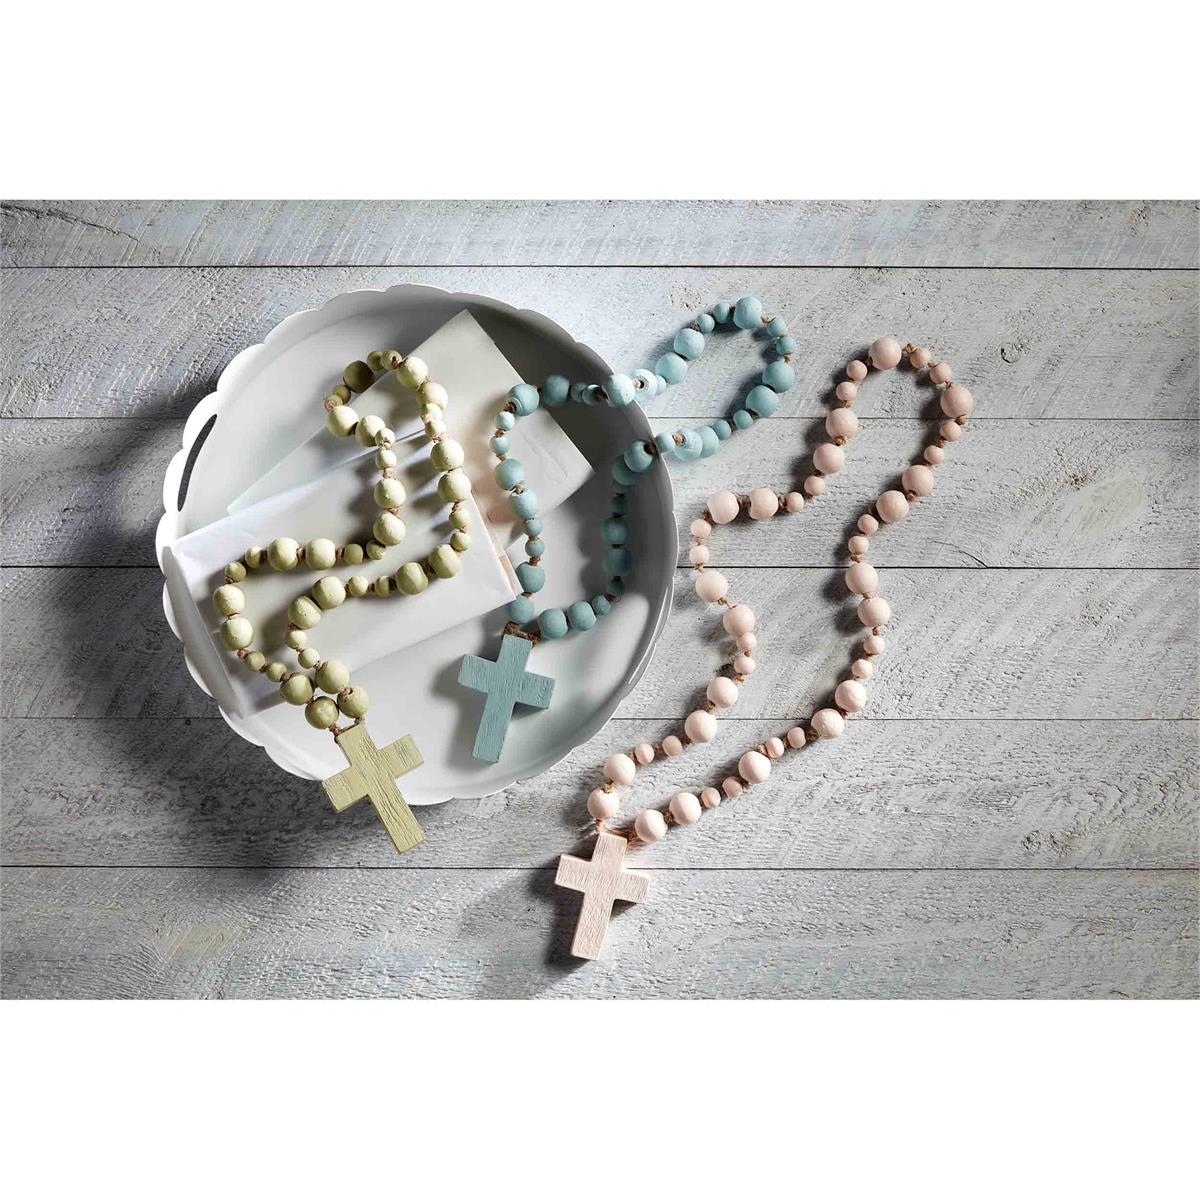 Mud Pie - Decorative Cross Beads